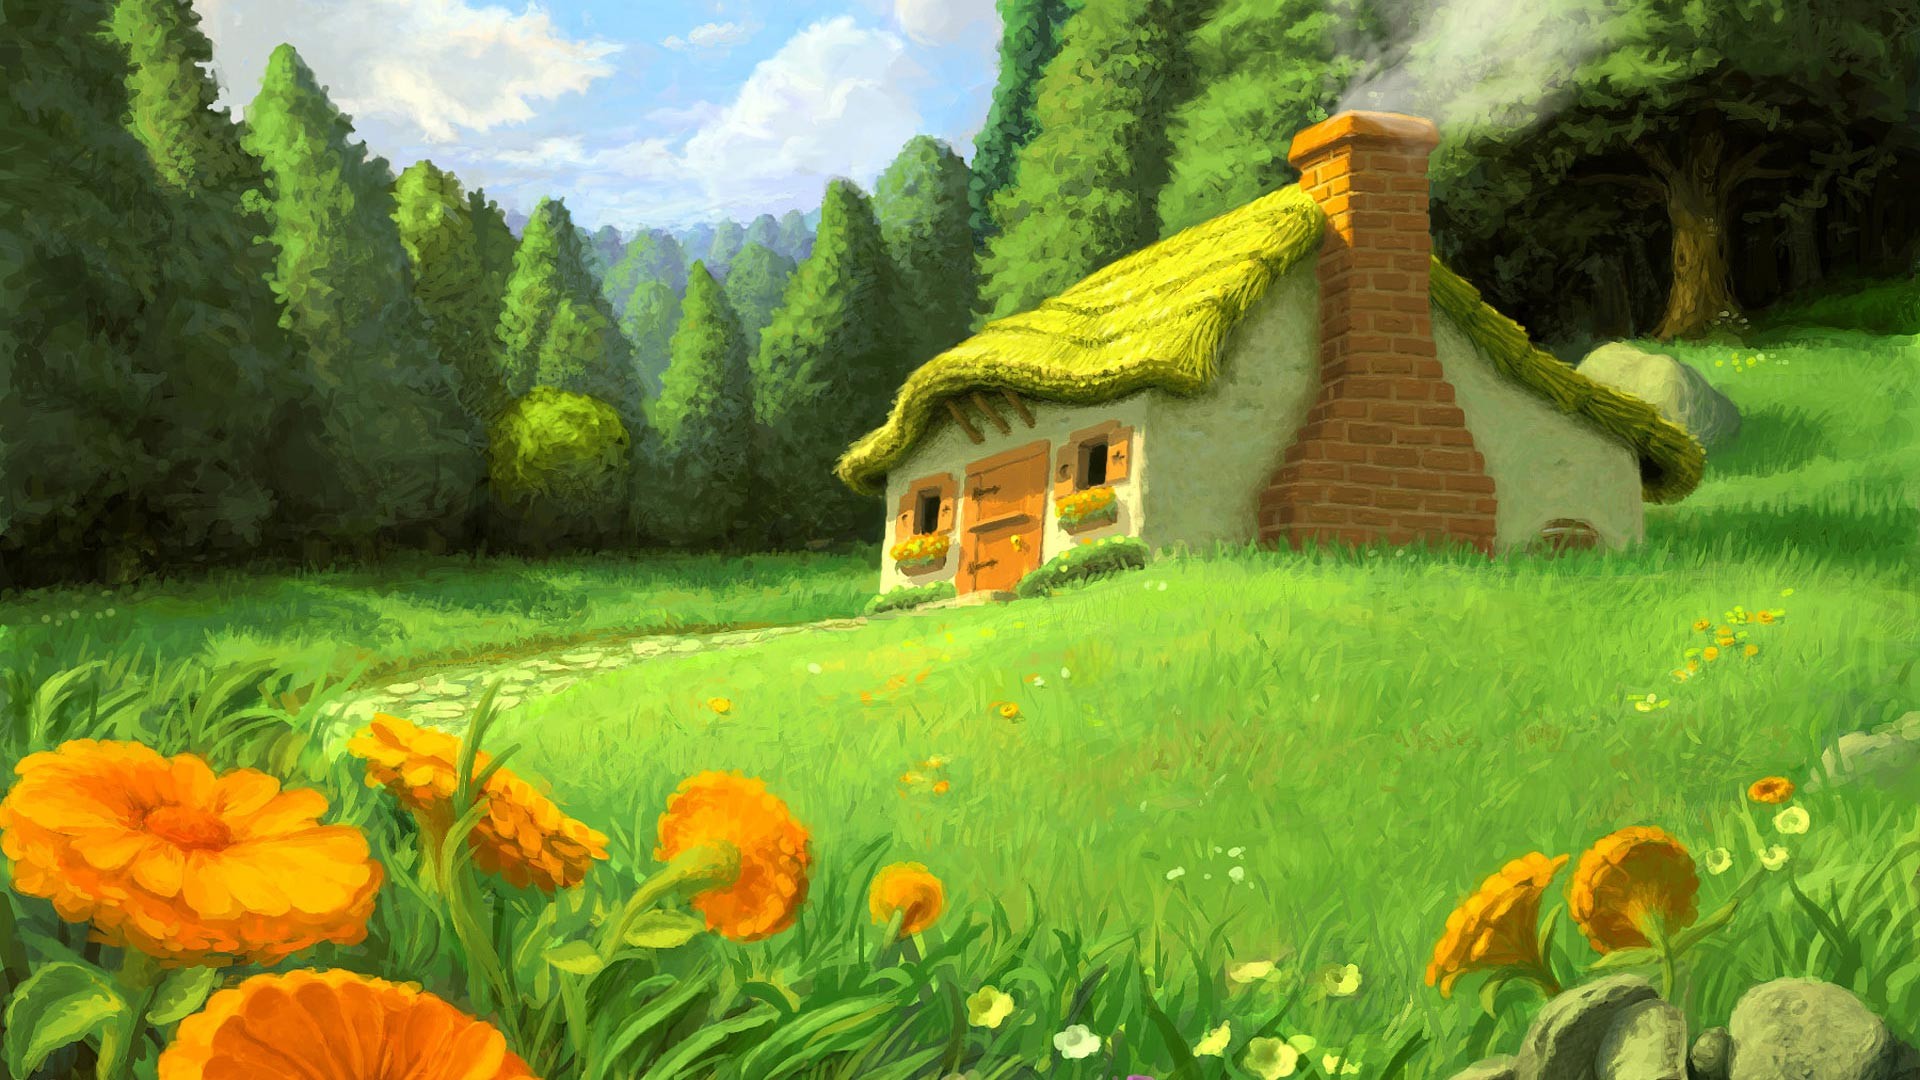 Fairy Cottage Landscape Full HD Wallpaper Images For